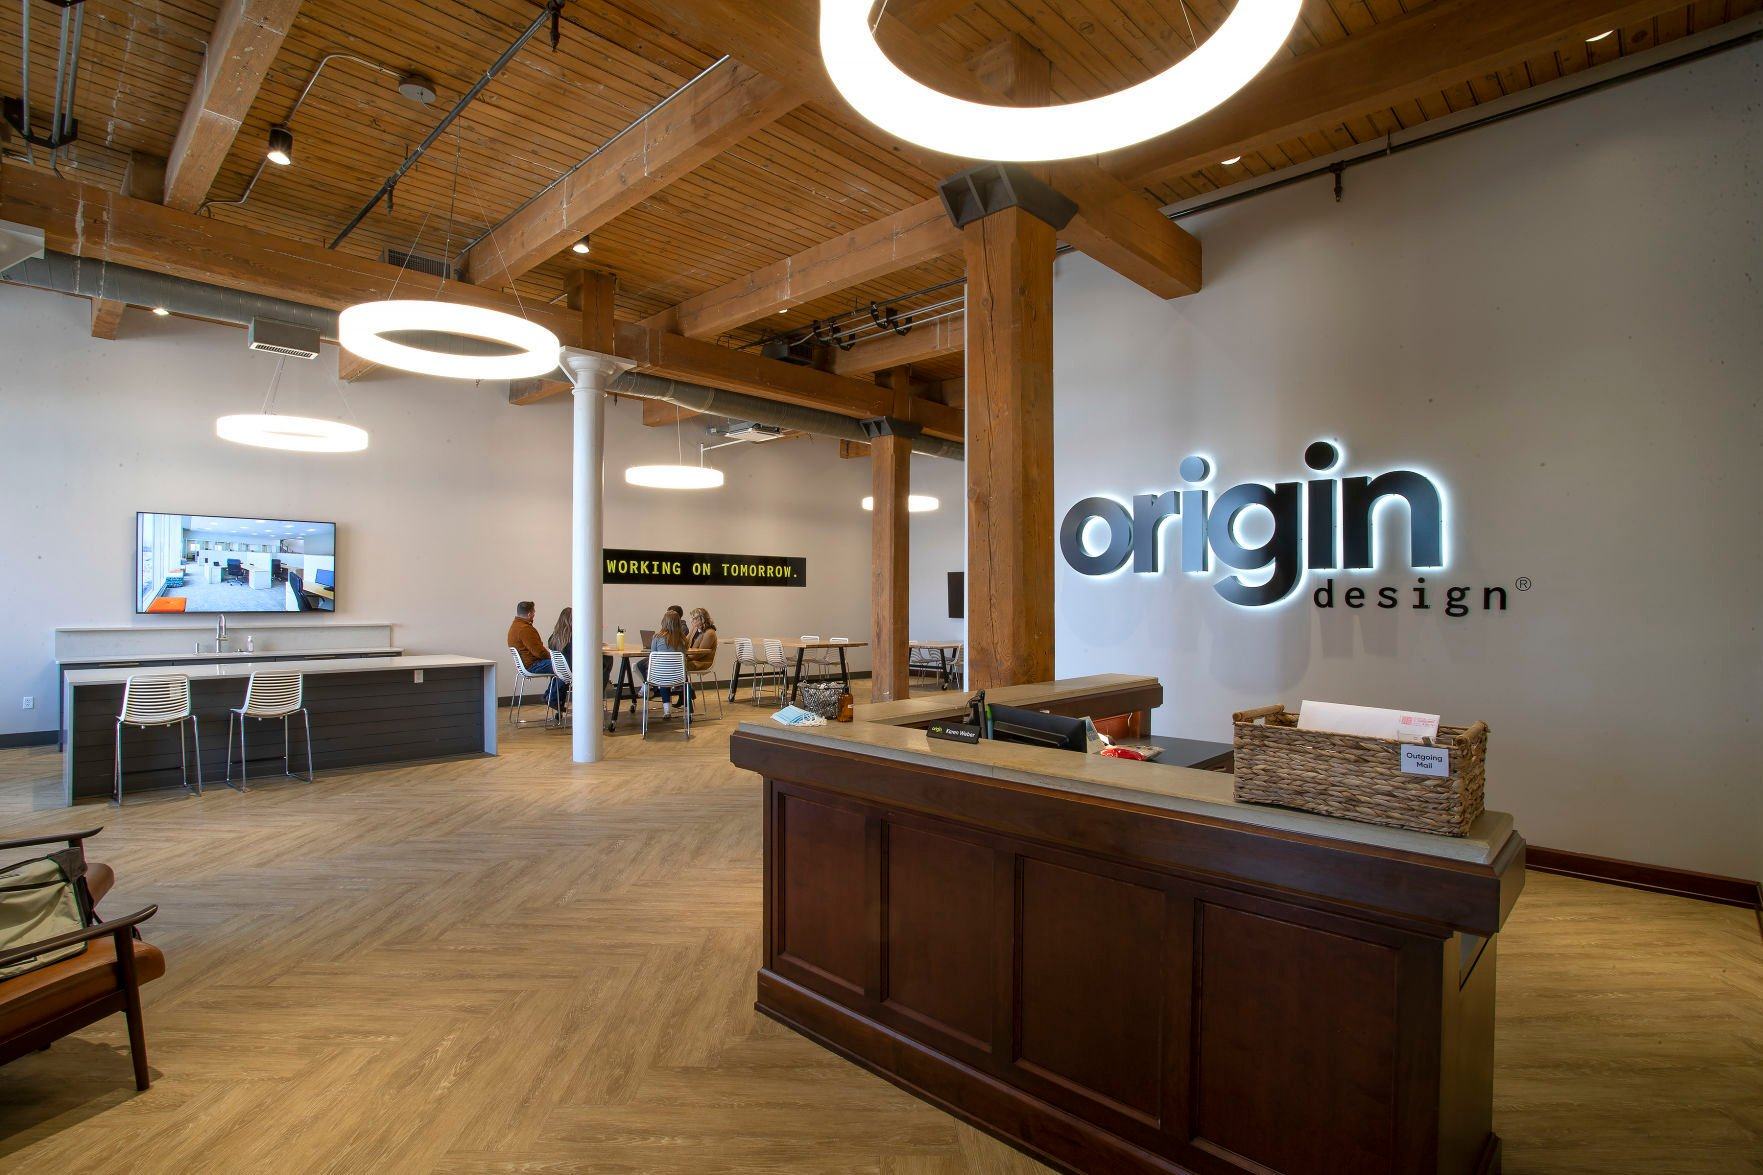 The interior of Origin Design at 137 Main St. in Dubuque.    PHOTO CREDIT: Stephen Gassman